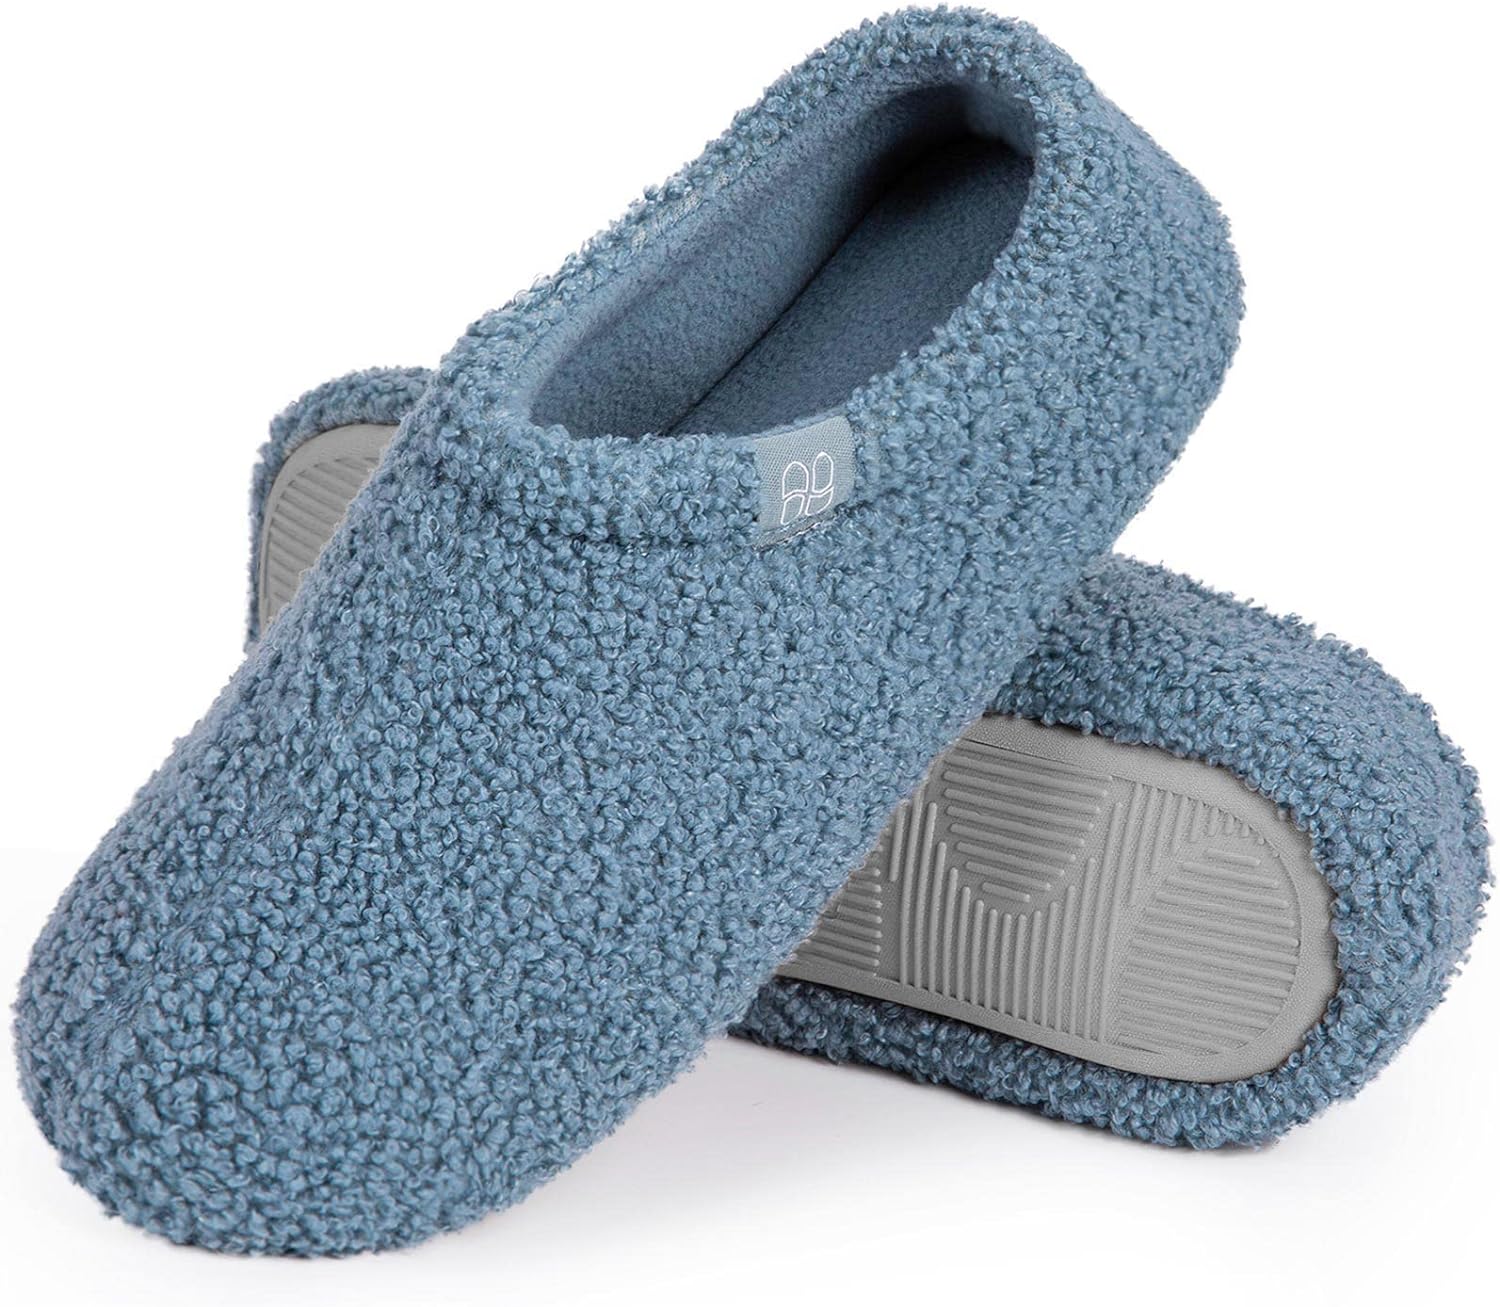 HomeTop Women's Fuzzy Curly Fur Memory Foam Loafer Slippers with Polar Fleece Lining